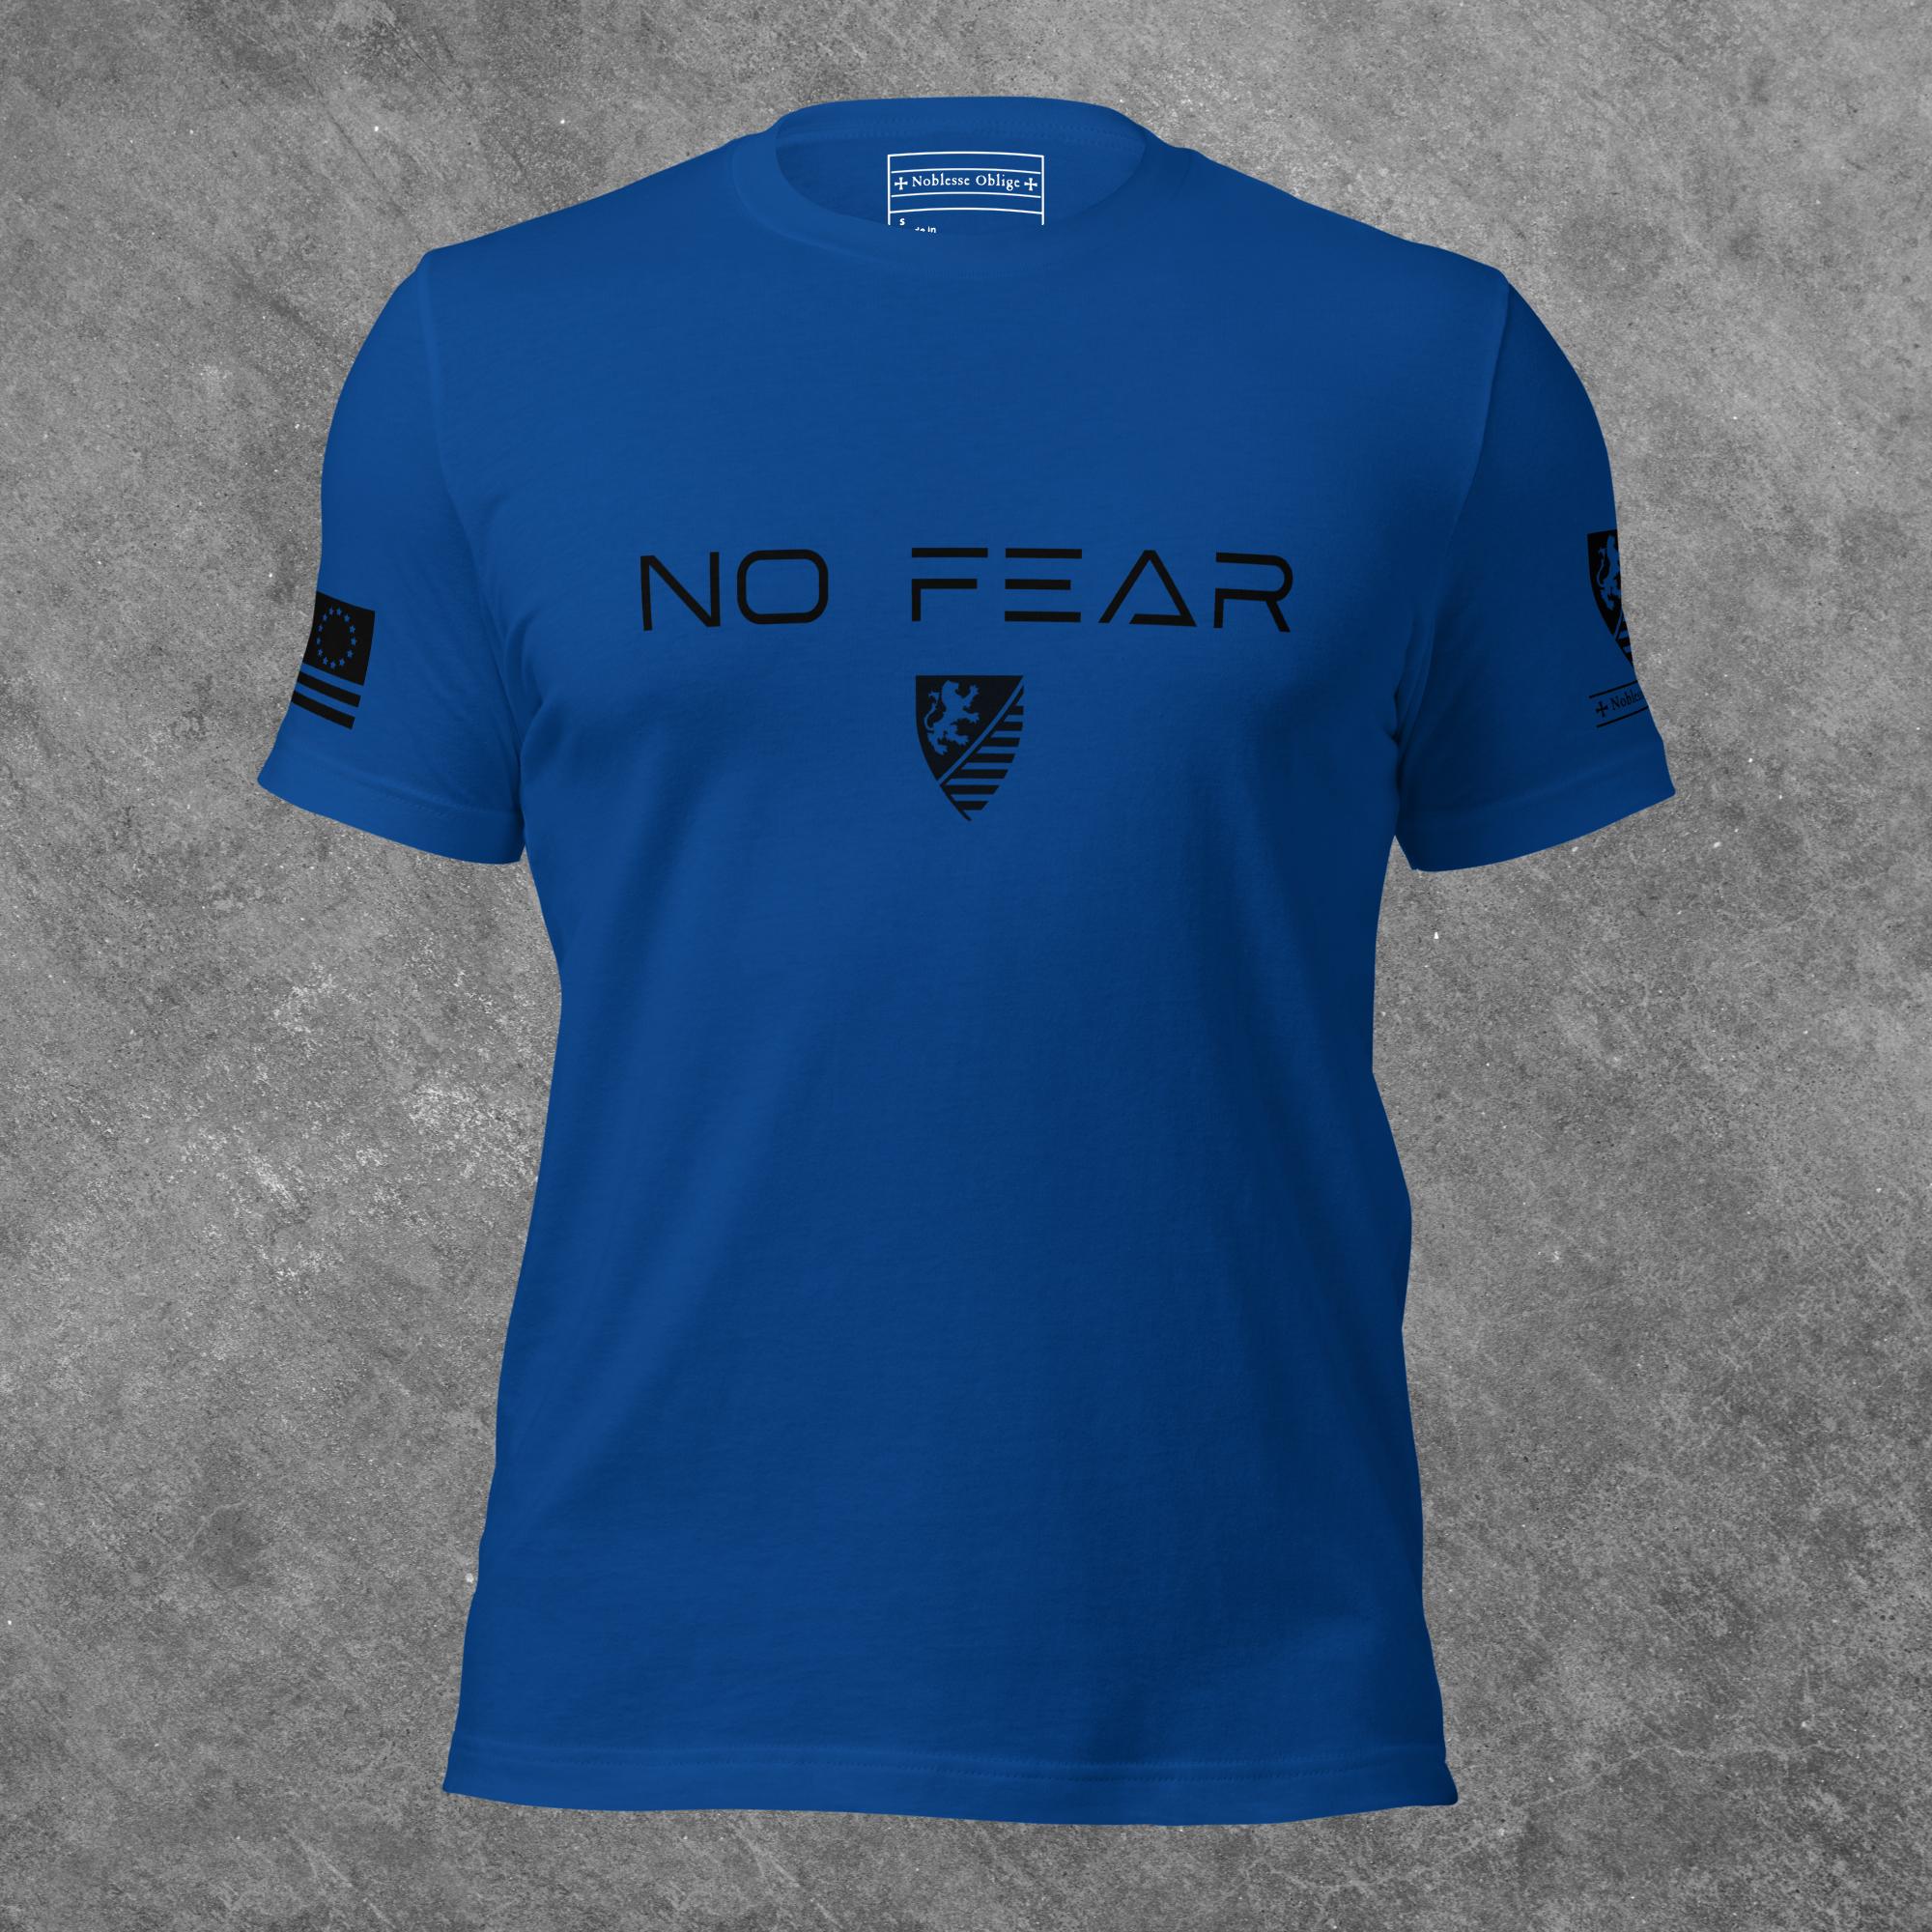 No Fear - Men's T-shirt - Noblesse Oblige Apparel